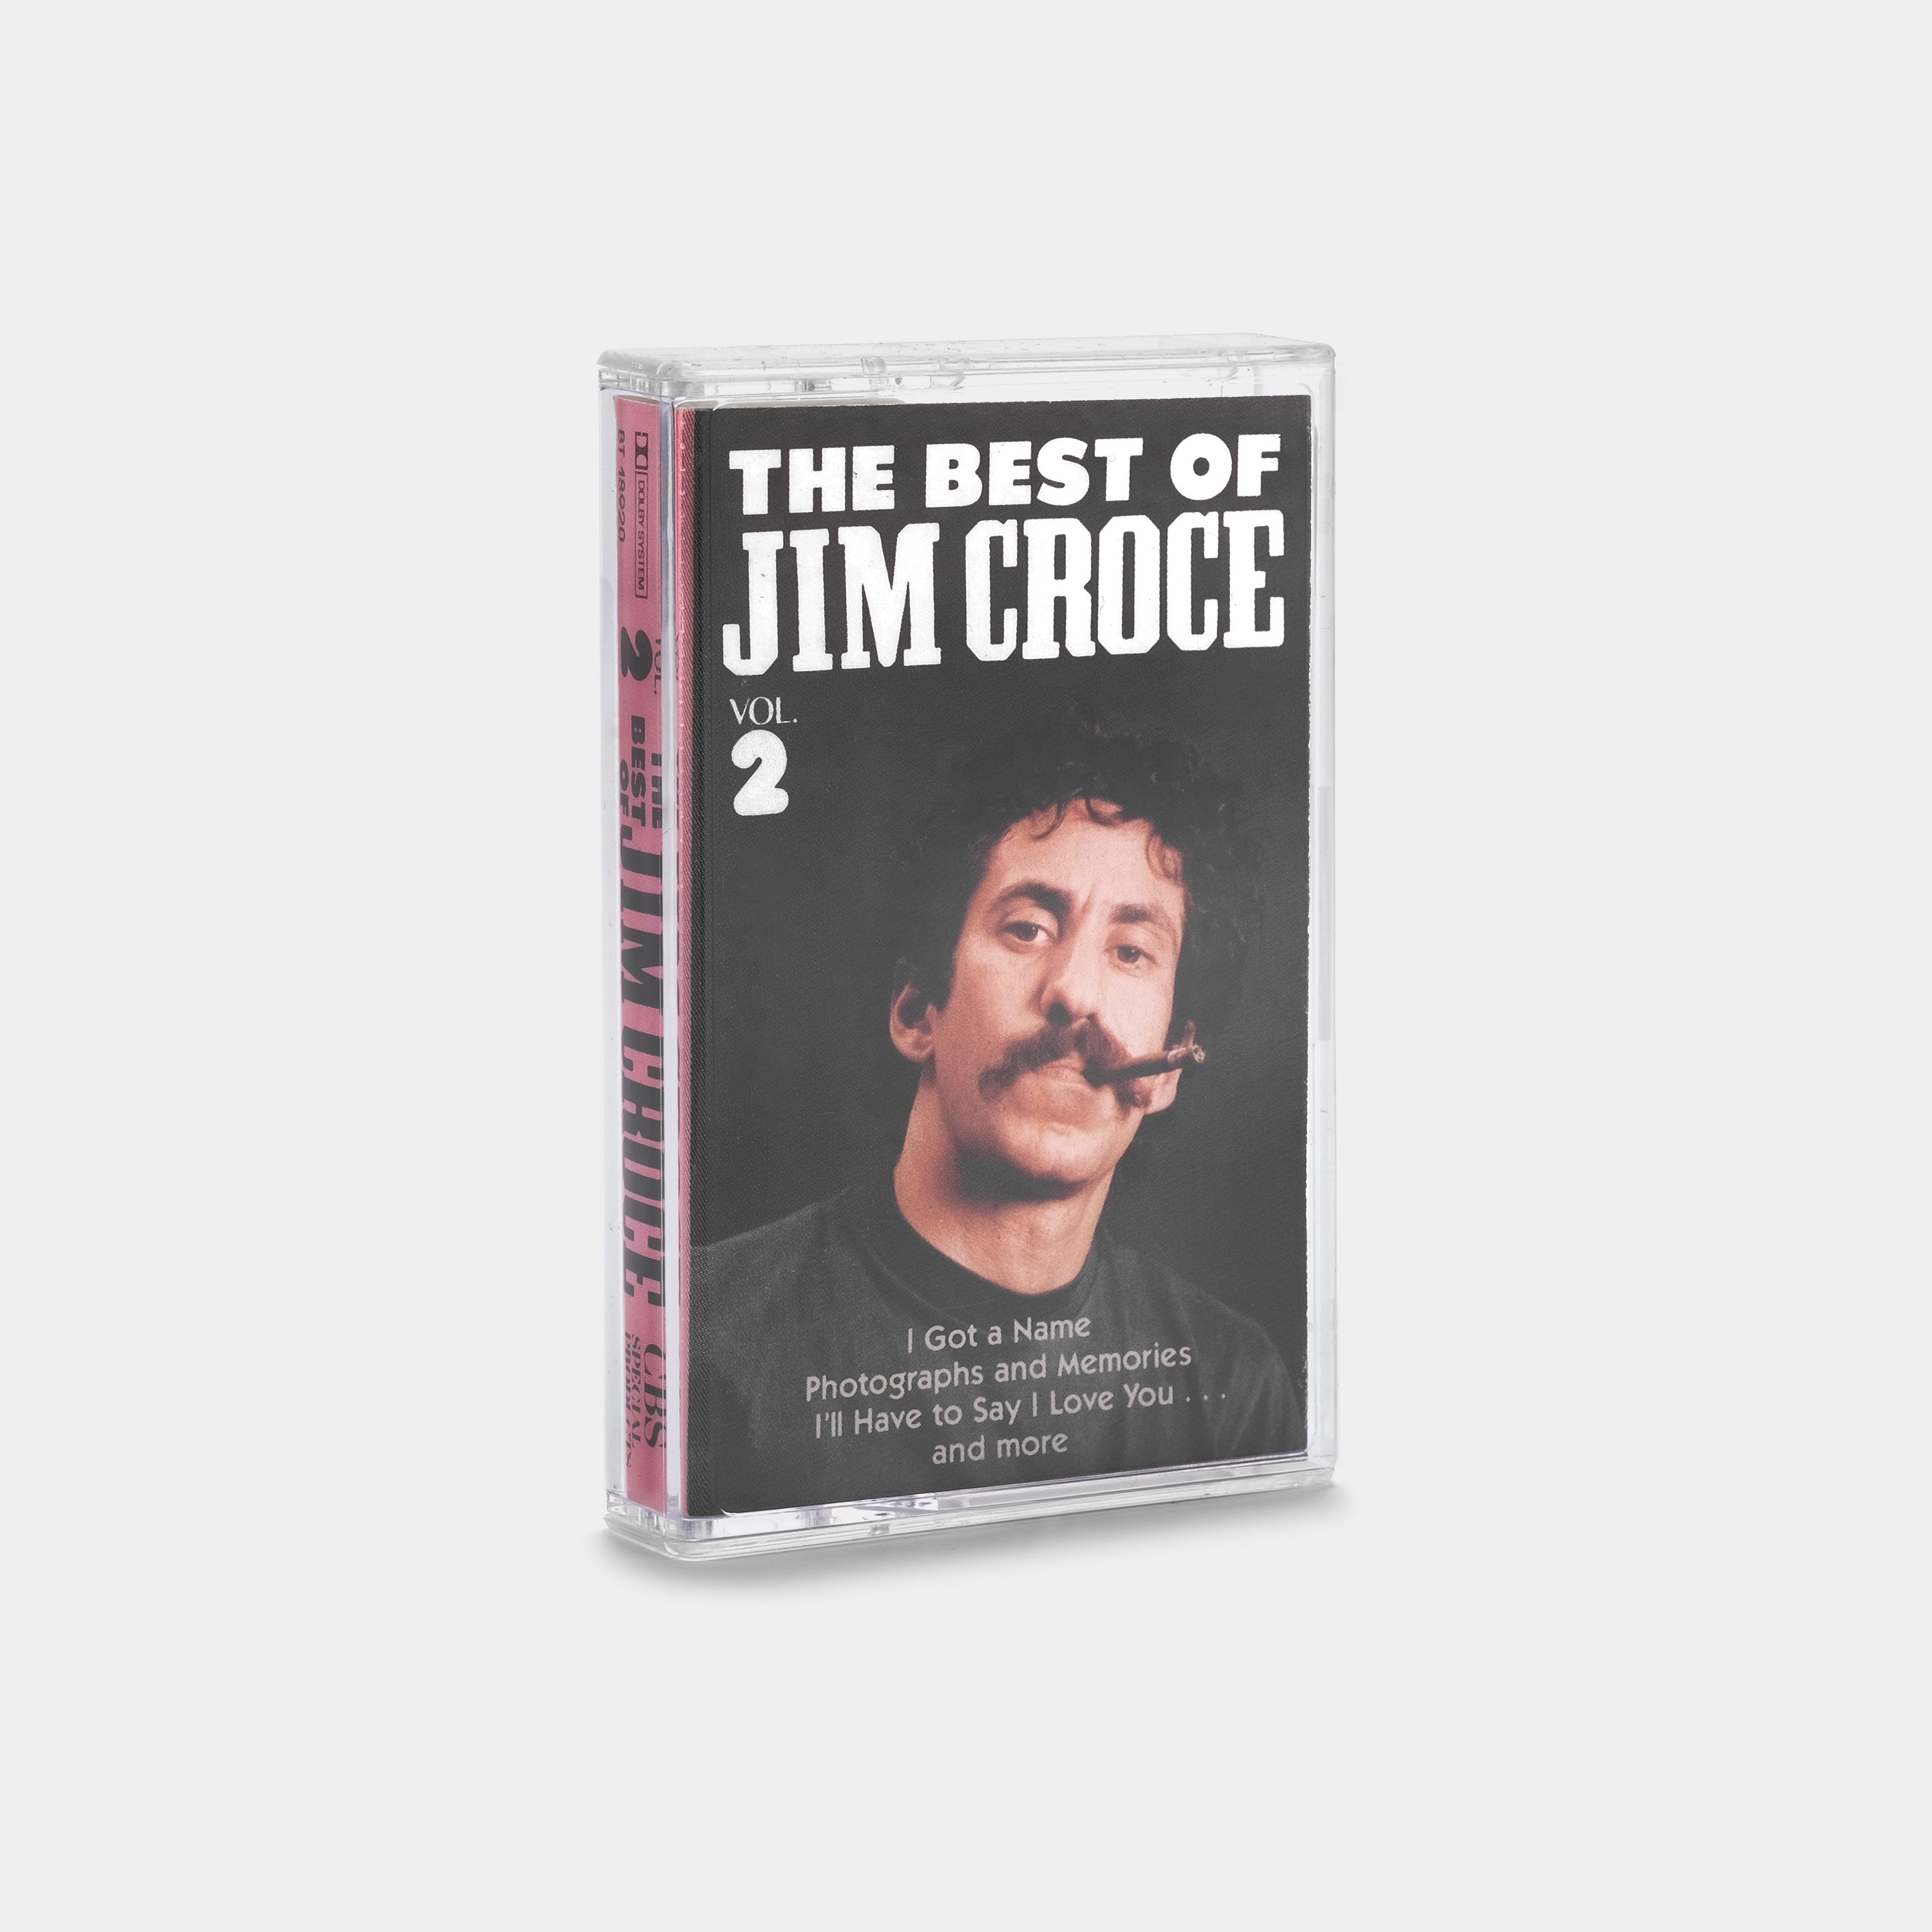 Jim Croce - The Best of Jim Croce - Vol. 2 Cassette Tape